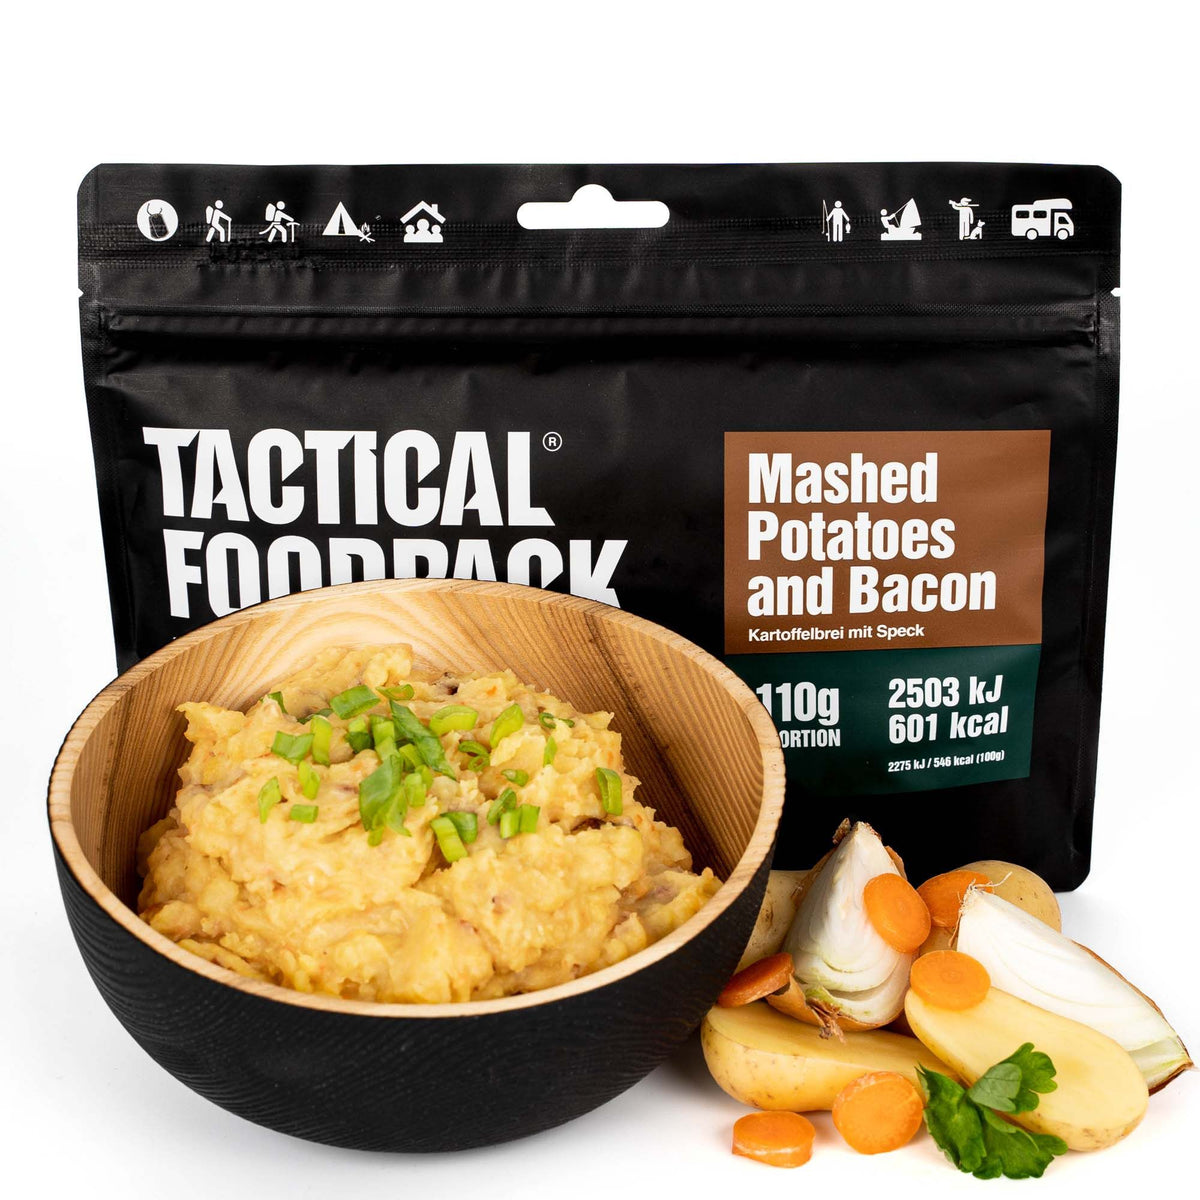 Tactical Foodpack | Mashed Potatoes and Bacon 110g - Purè di patate e pancetta